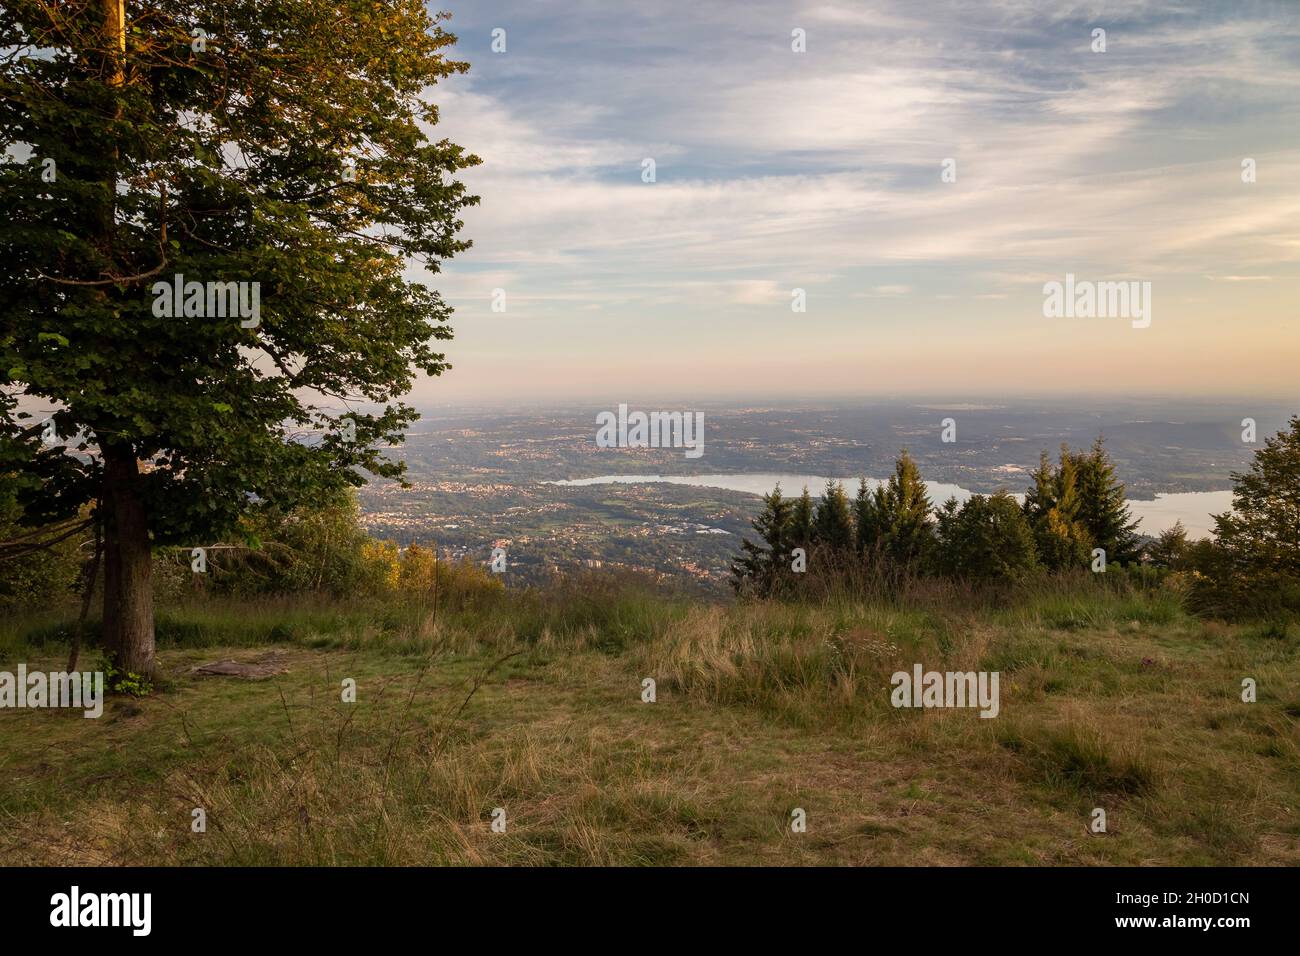 Blick auf den Varese-See vom Aussichtspunkt Punta di Mezzo am Campo dei Fiori bei Sonnenuntergang. Campo dei Fiori, Varese, Parco Campo dei Fiori, Lombardei, Italien. Stockfoto